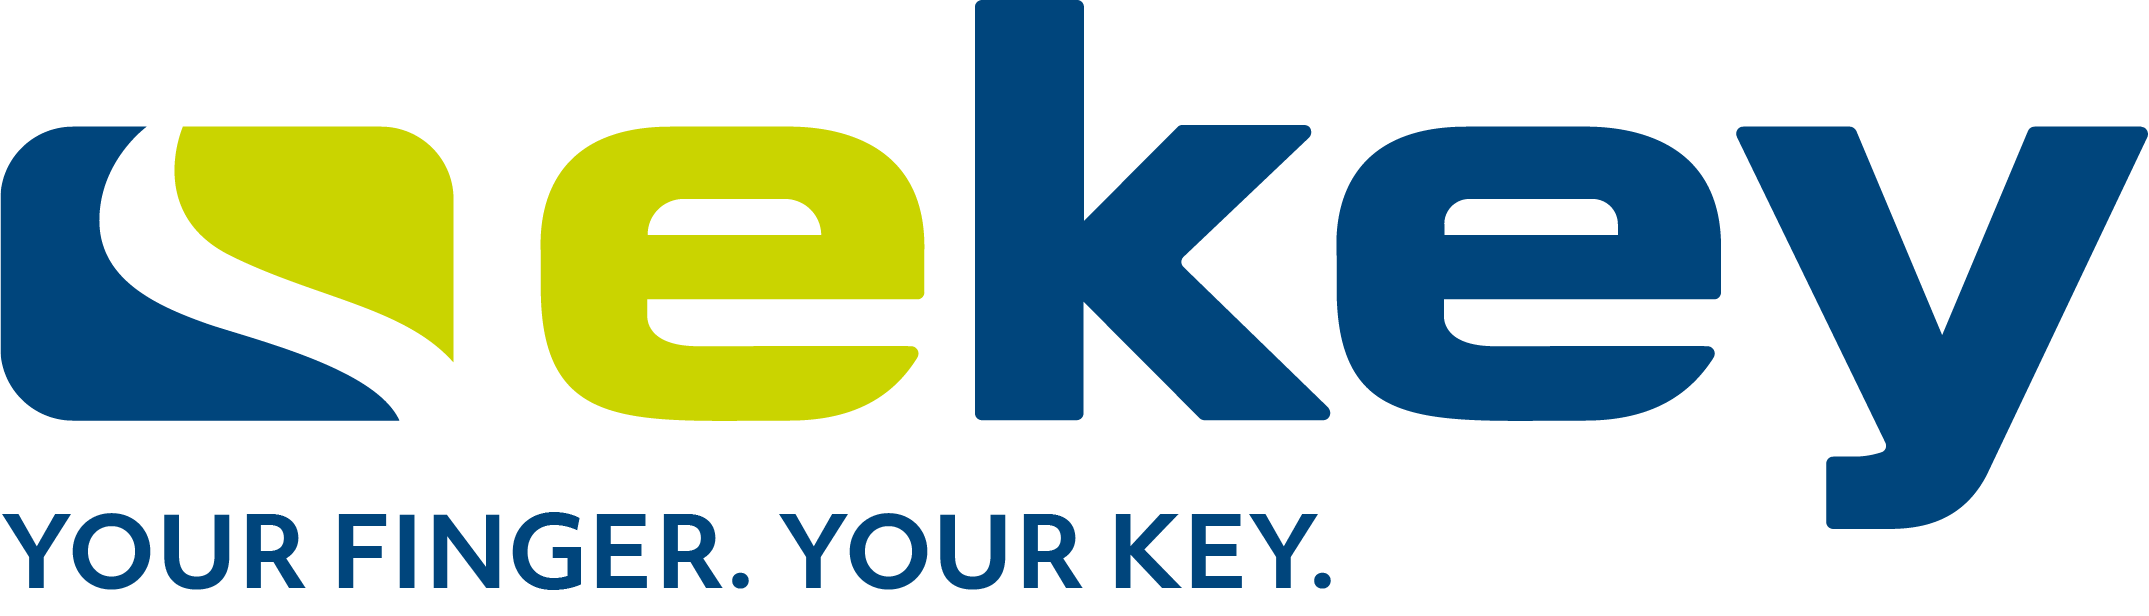 ekey logo